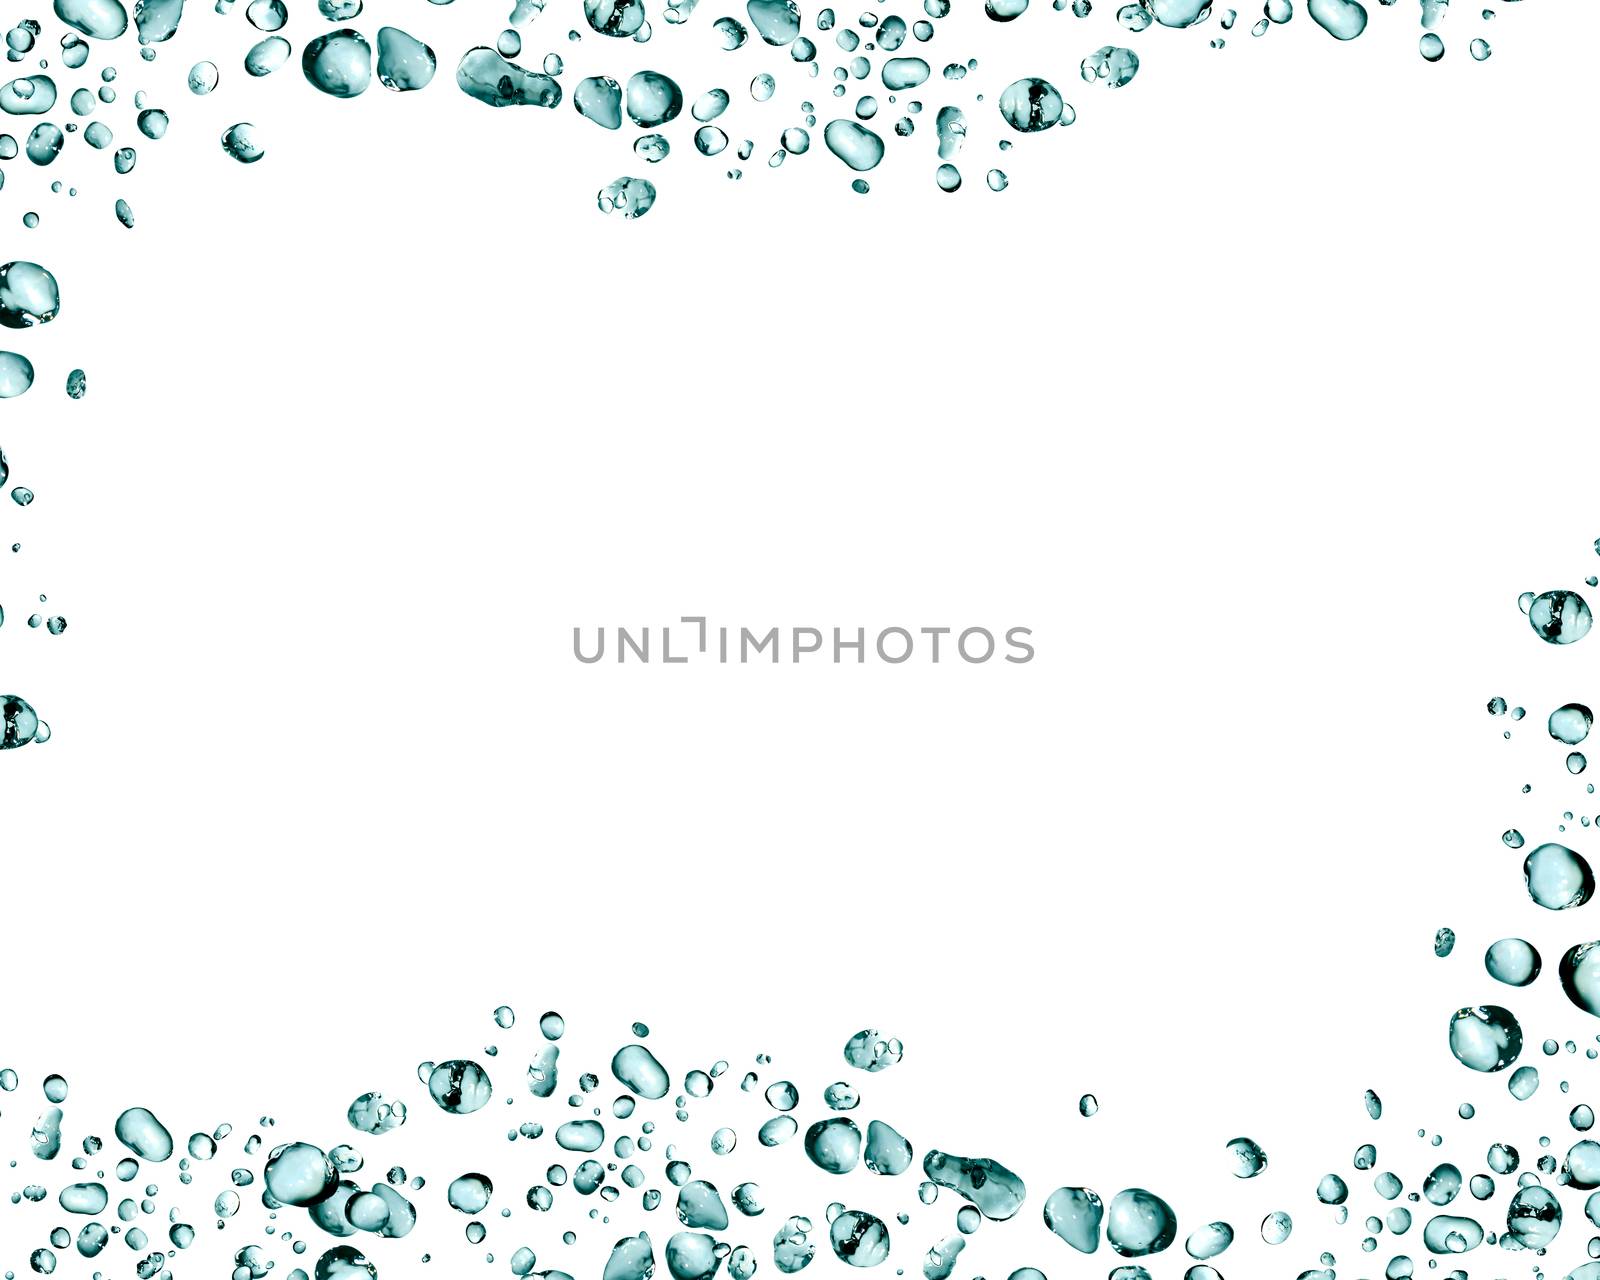 Water Drops Frame by kvkirillov